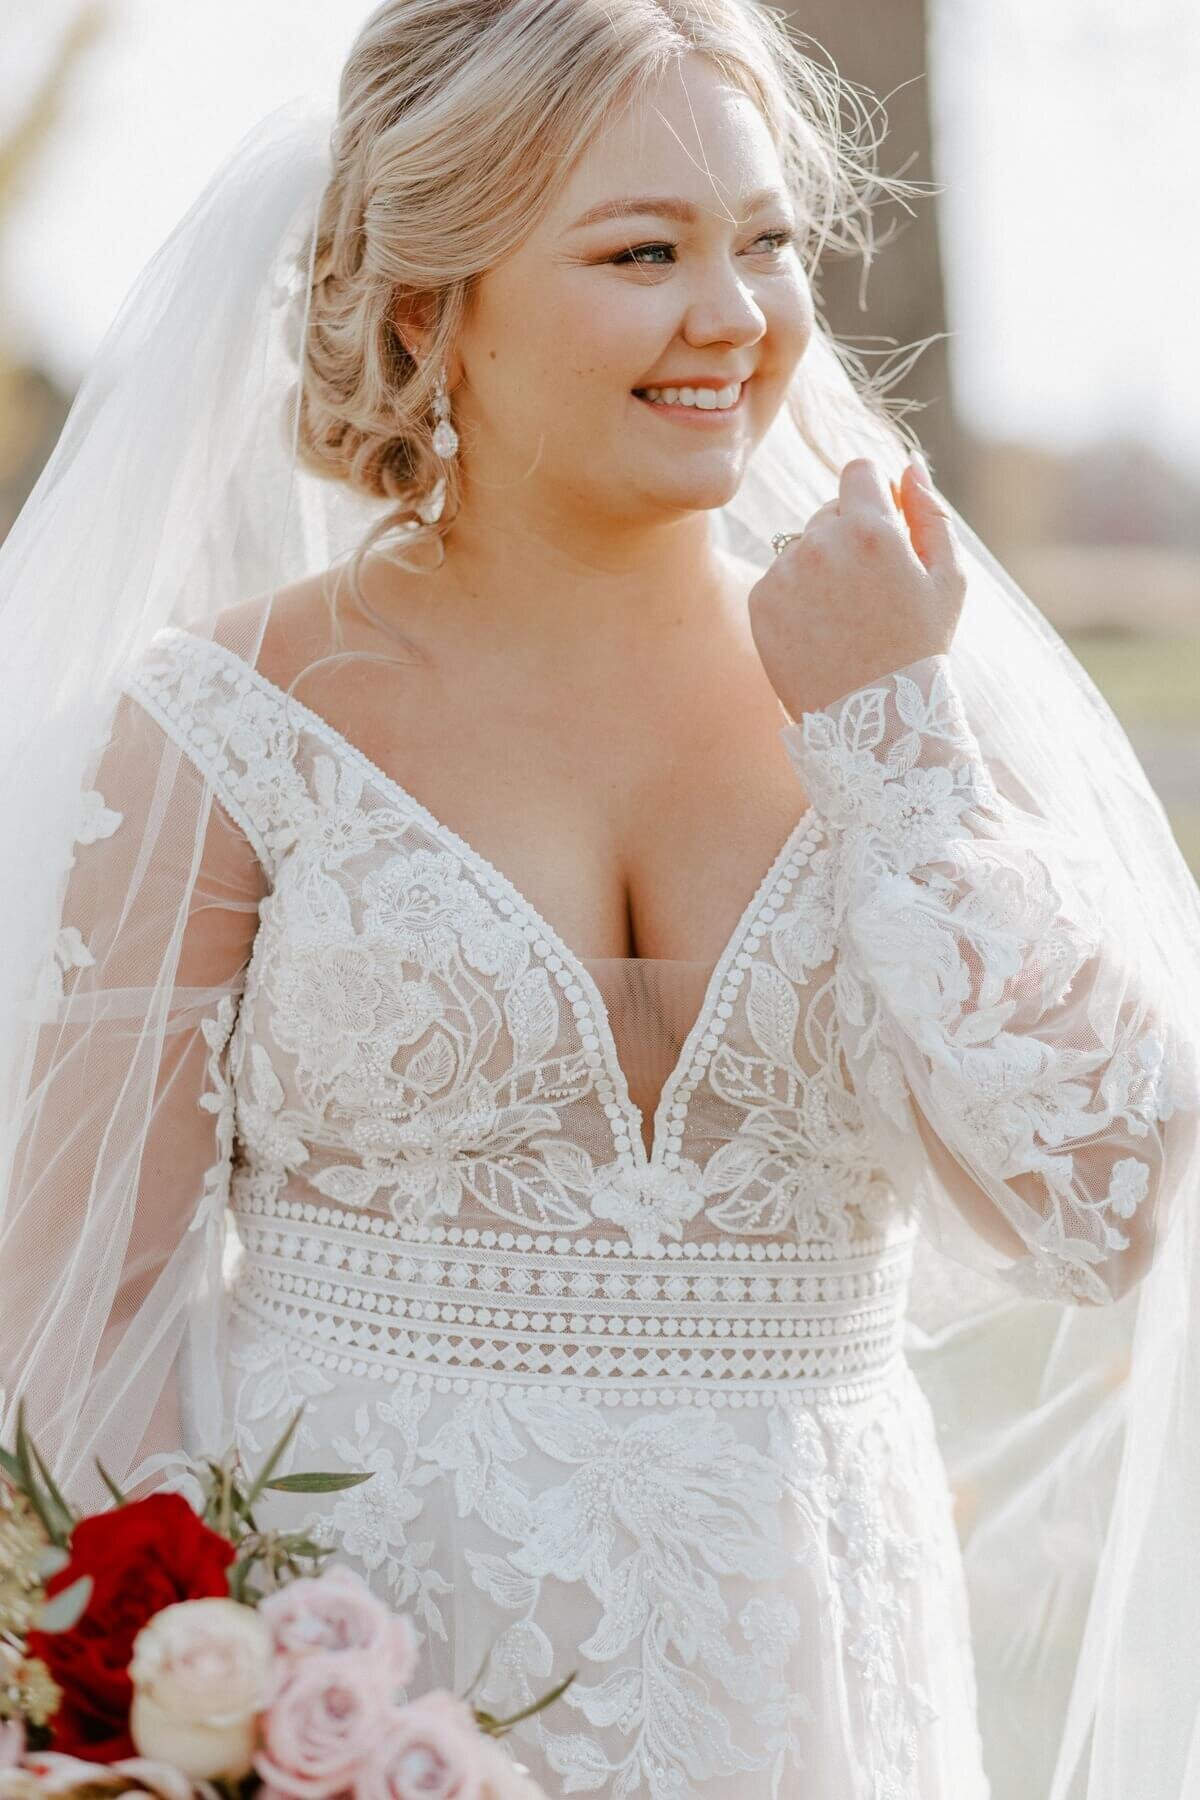 17-kara-loryn-photography-bride-and-her-wedding-dress